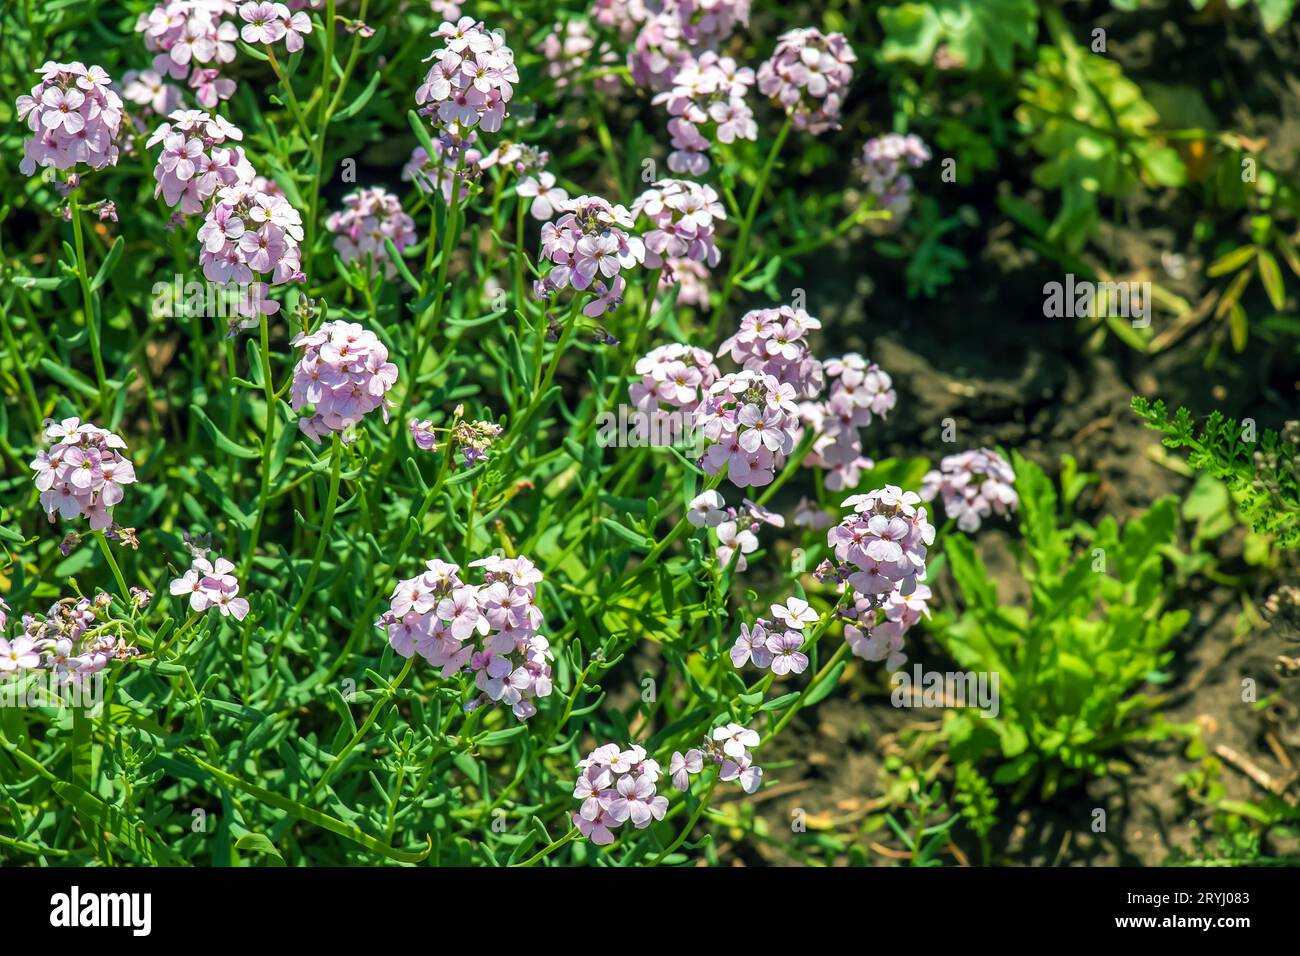 Persian cress or Persian flowers Aethionema grandiflorum blooms in the garden. Stock Photo